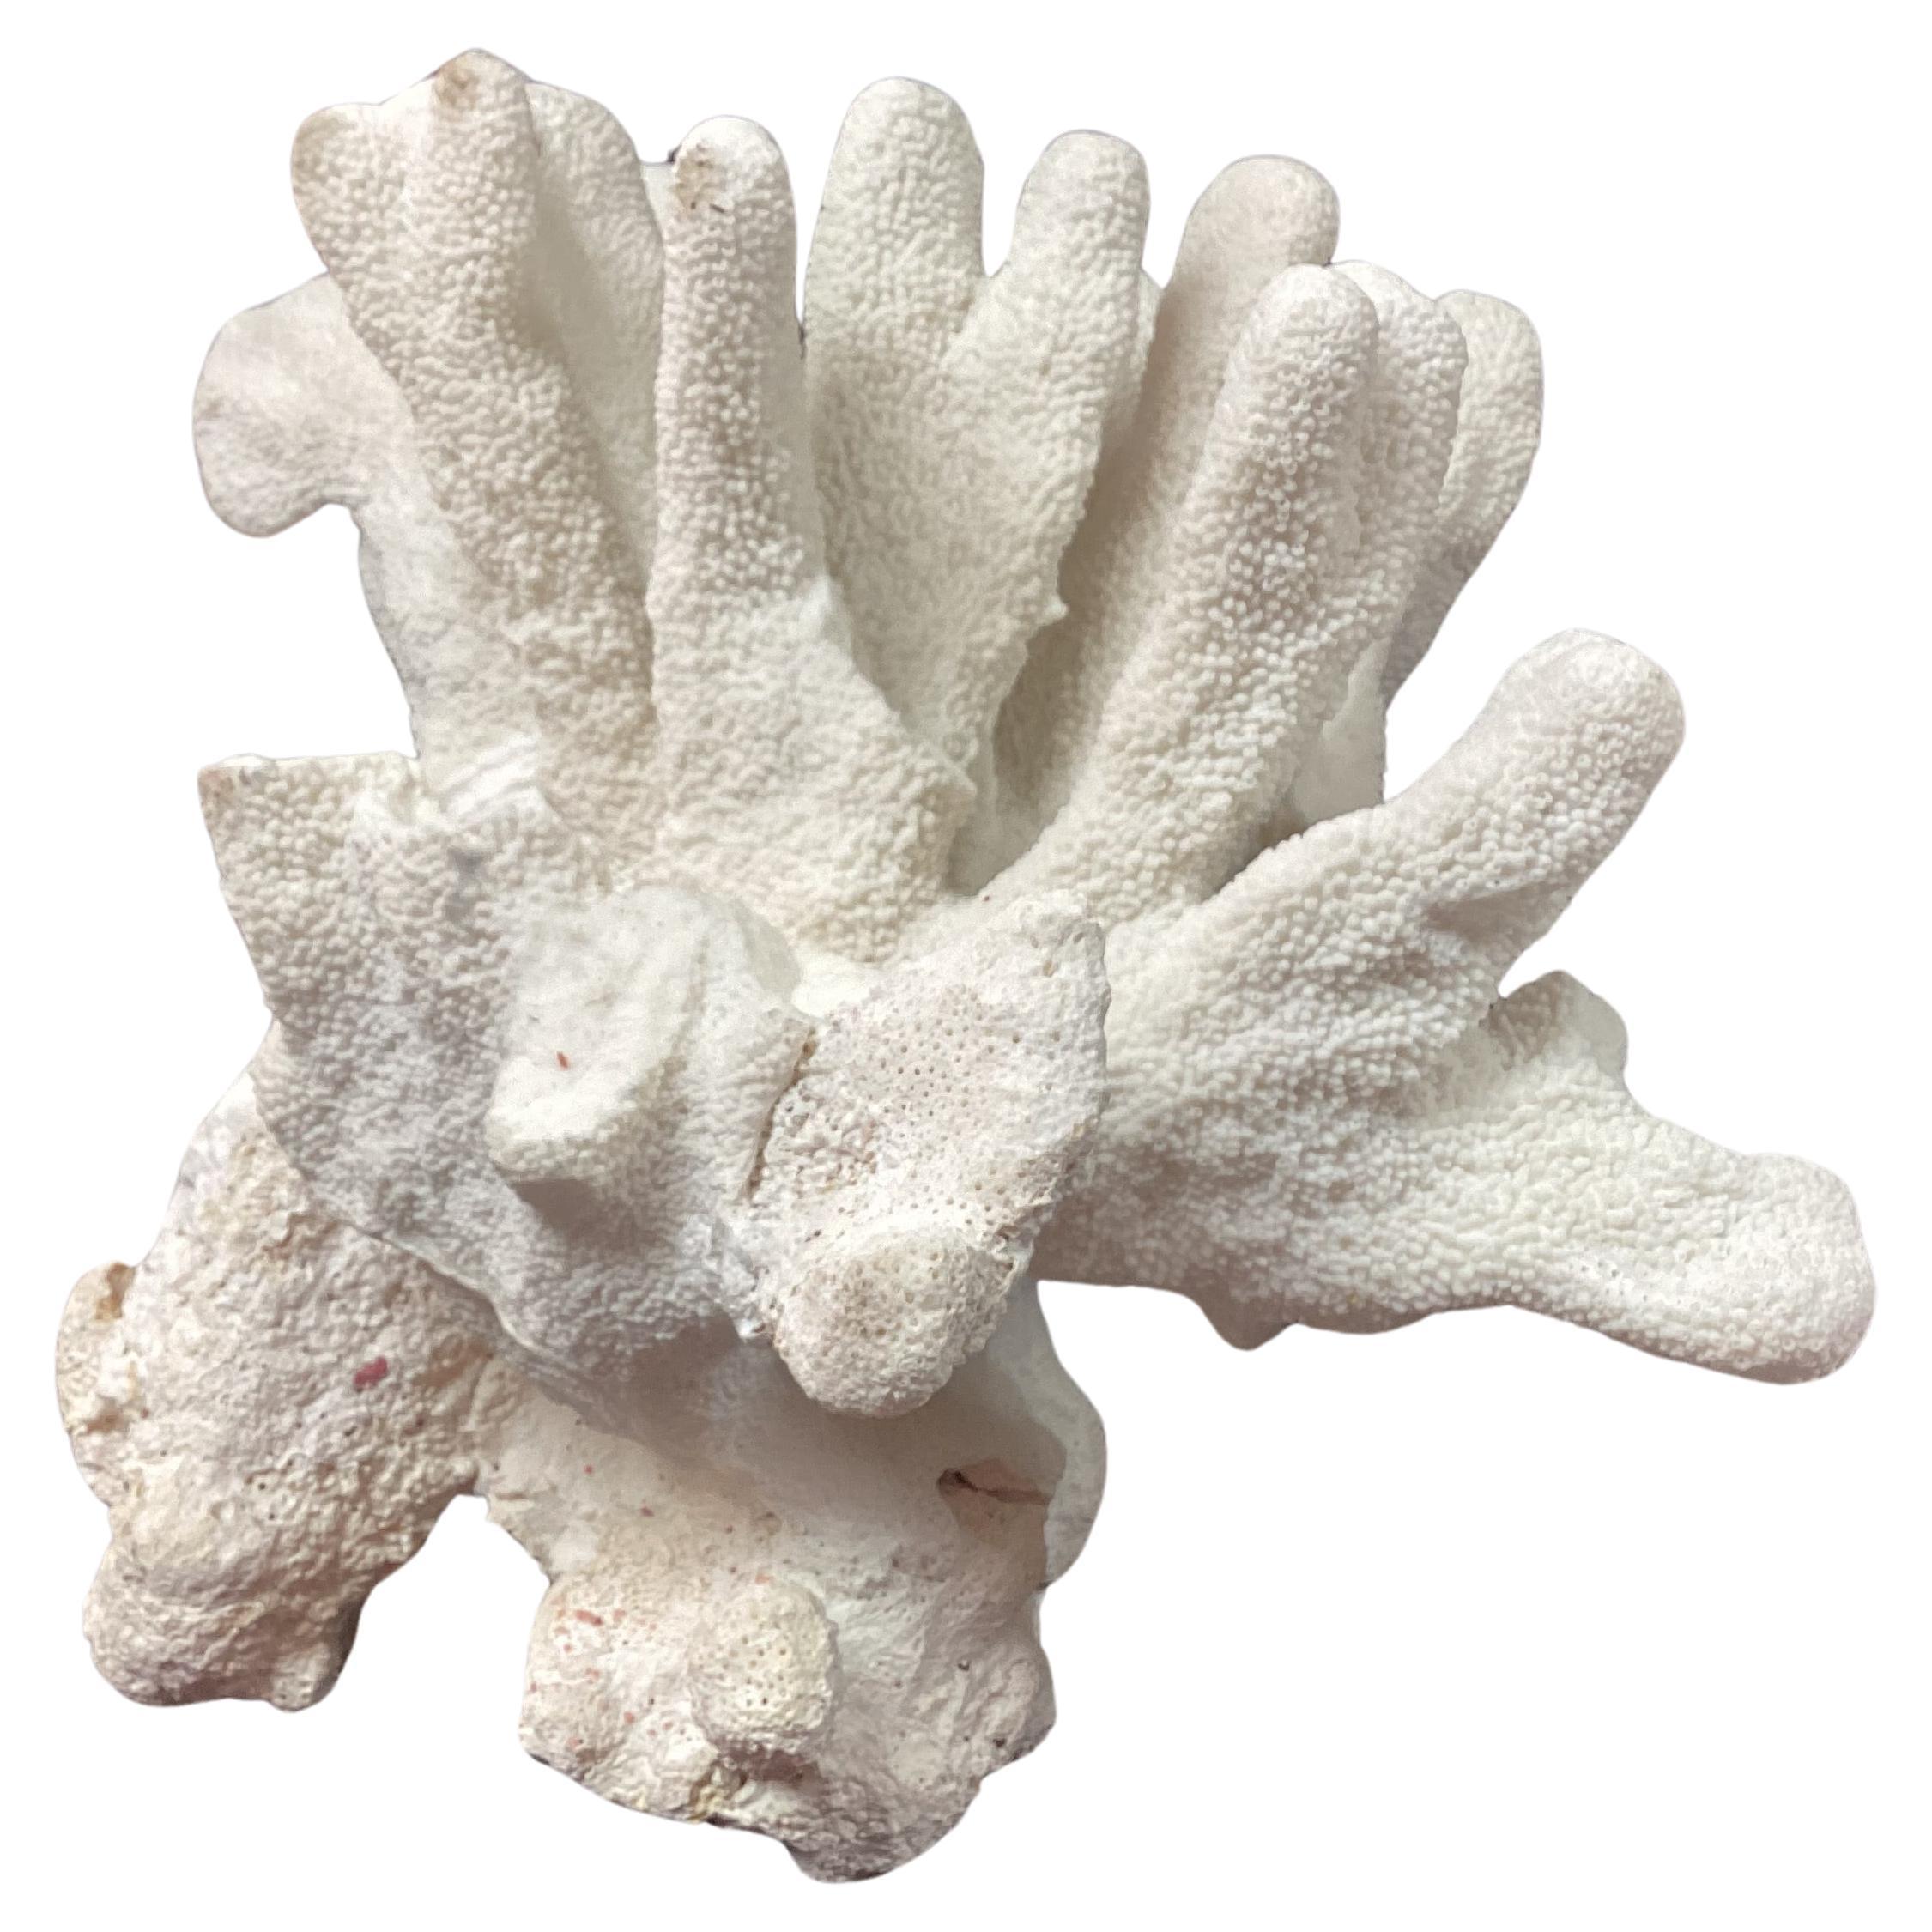 coral specimen